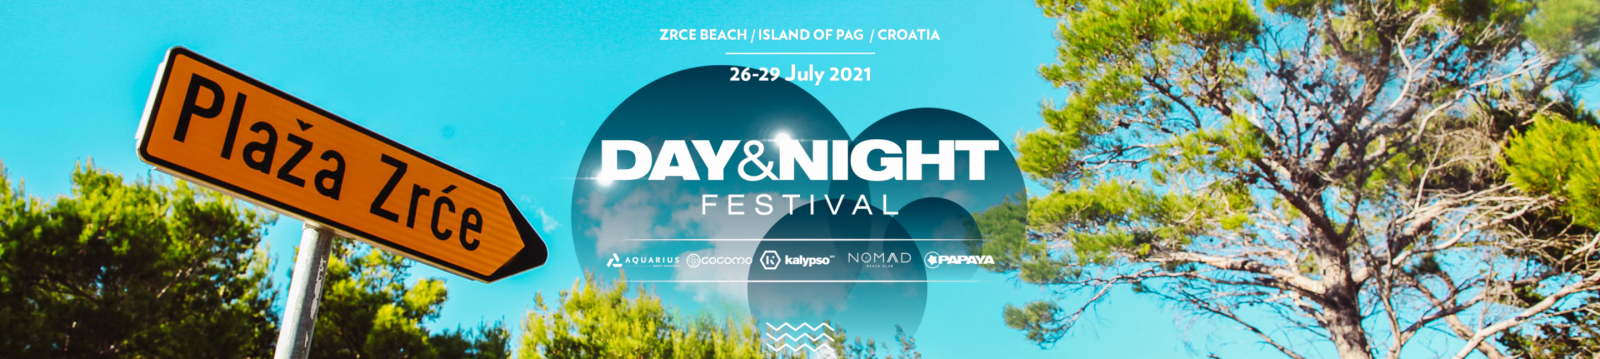 Day and Night festival Zrce 2021 Papaya Aquarius Kalypso Nomad